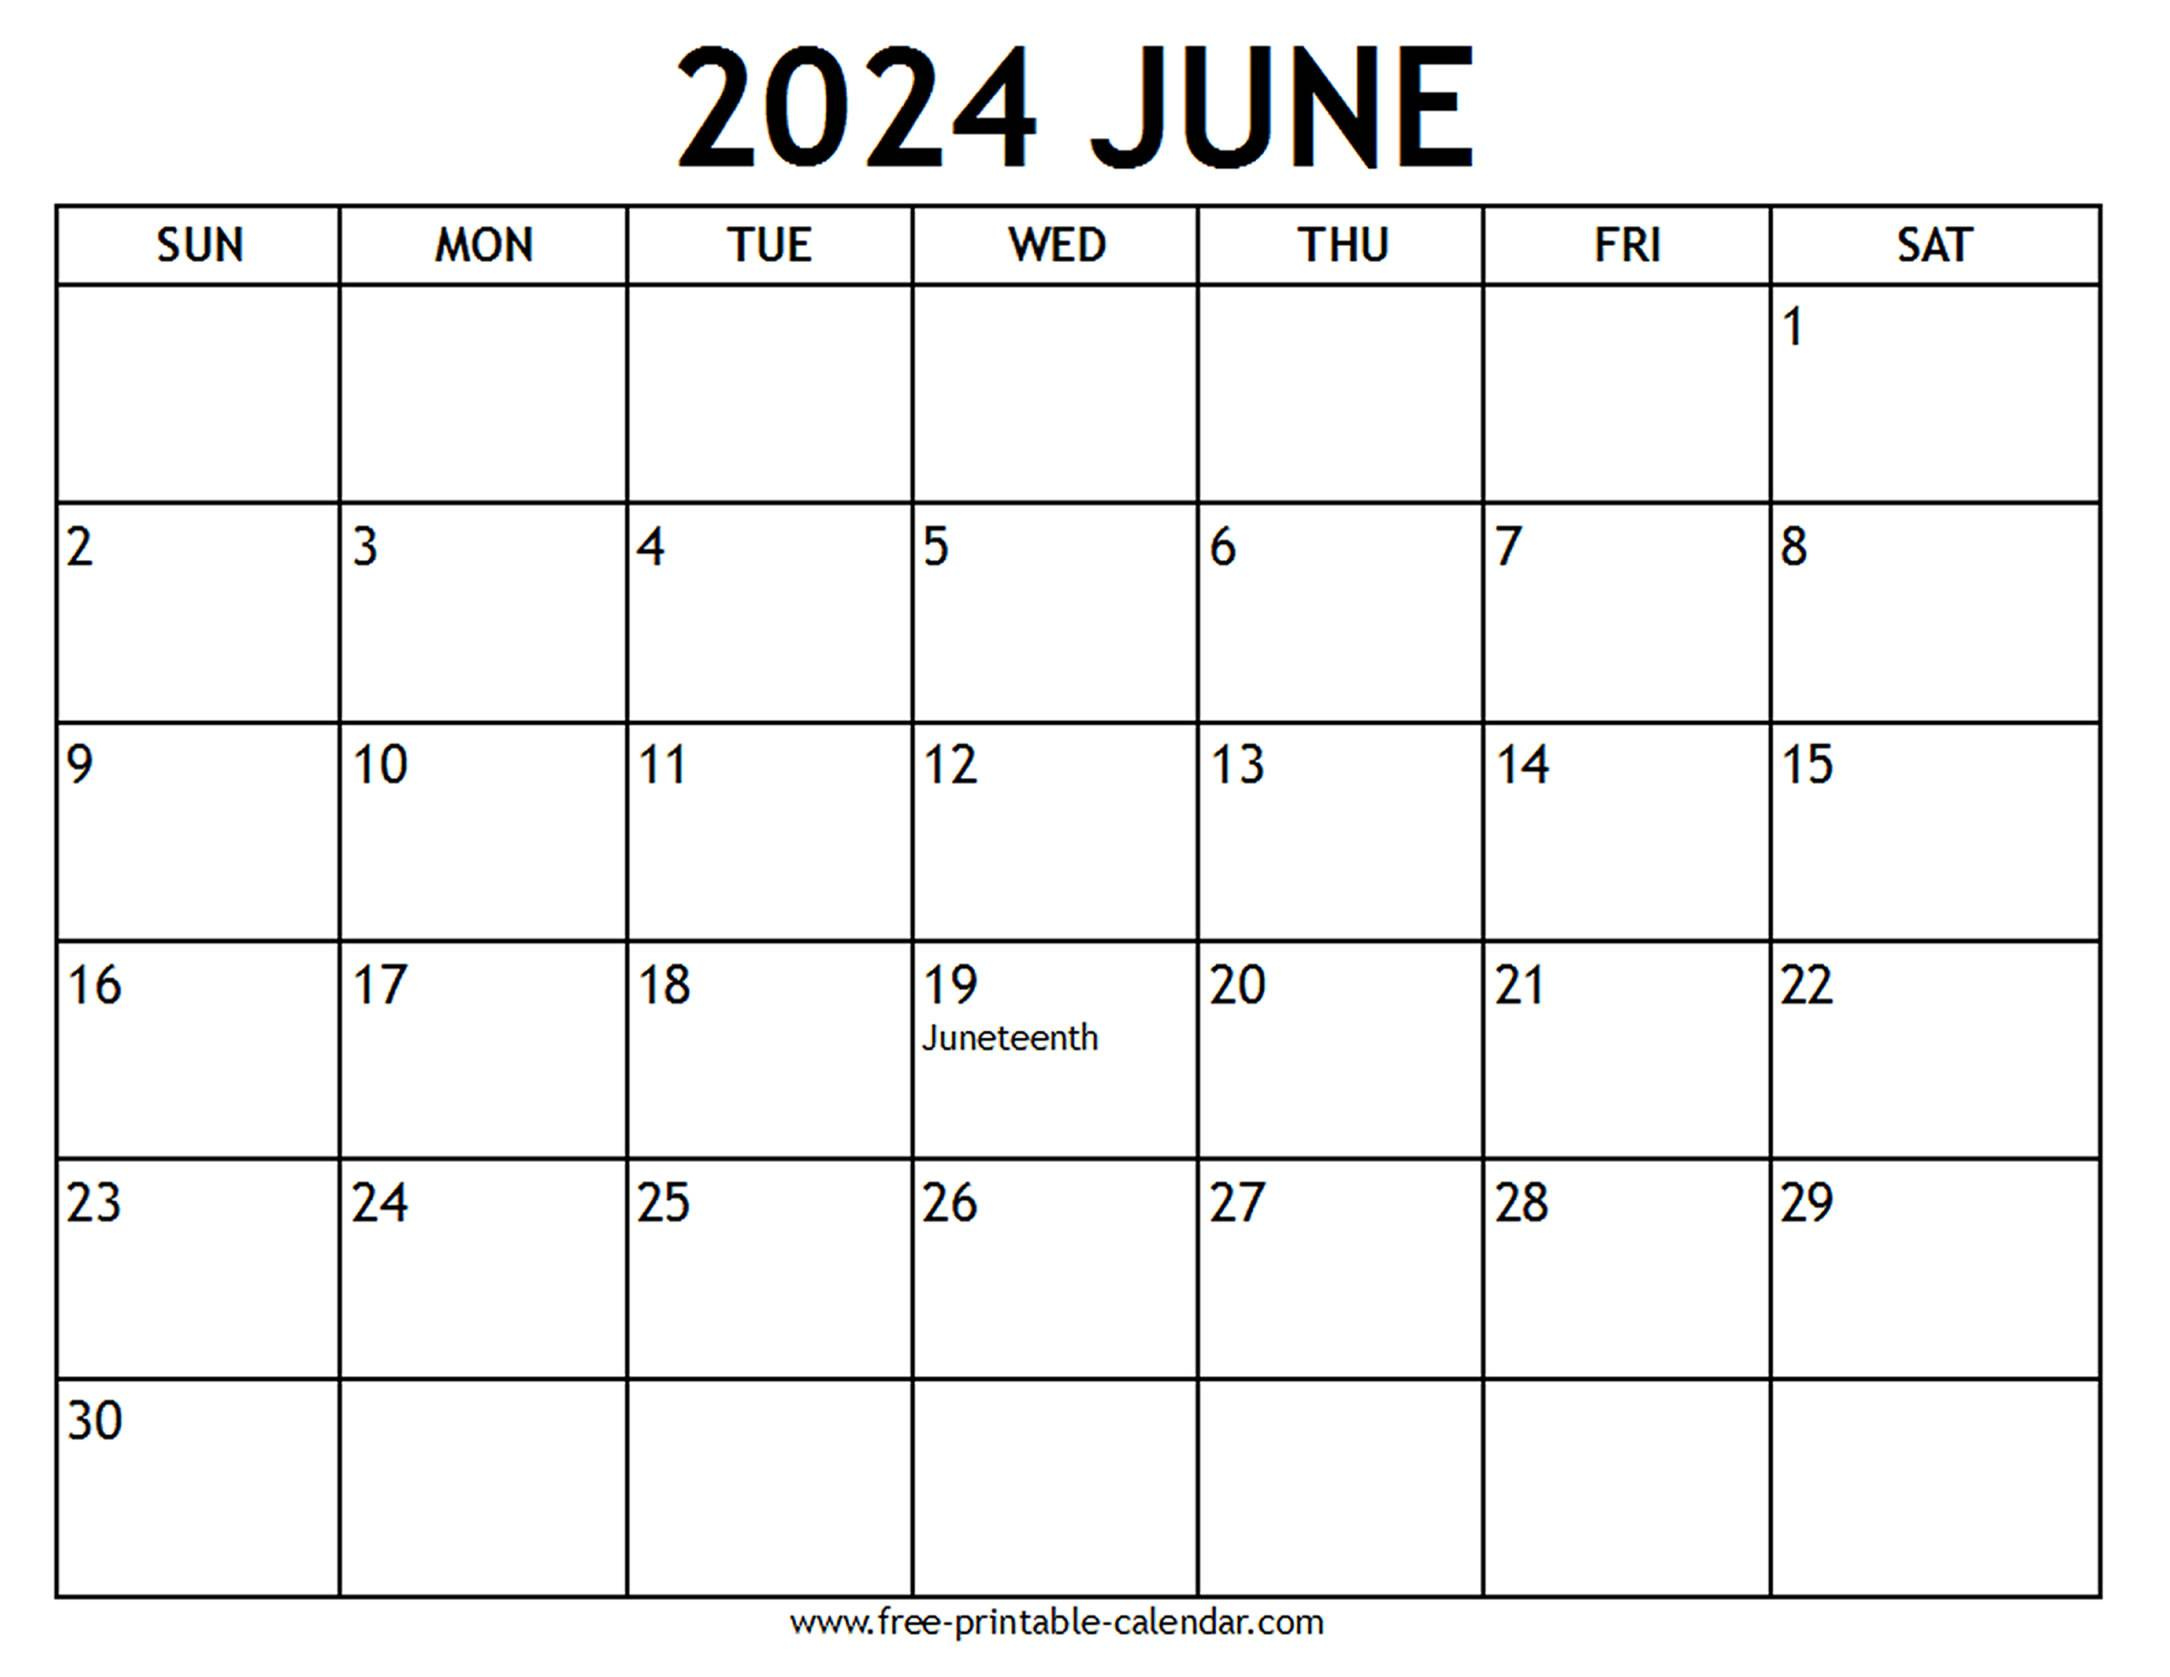 June 2024 Calendar Us Holidays - Free-Printable-Calendar with June 2024 Calendar With Holidays